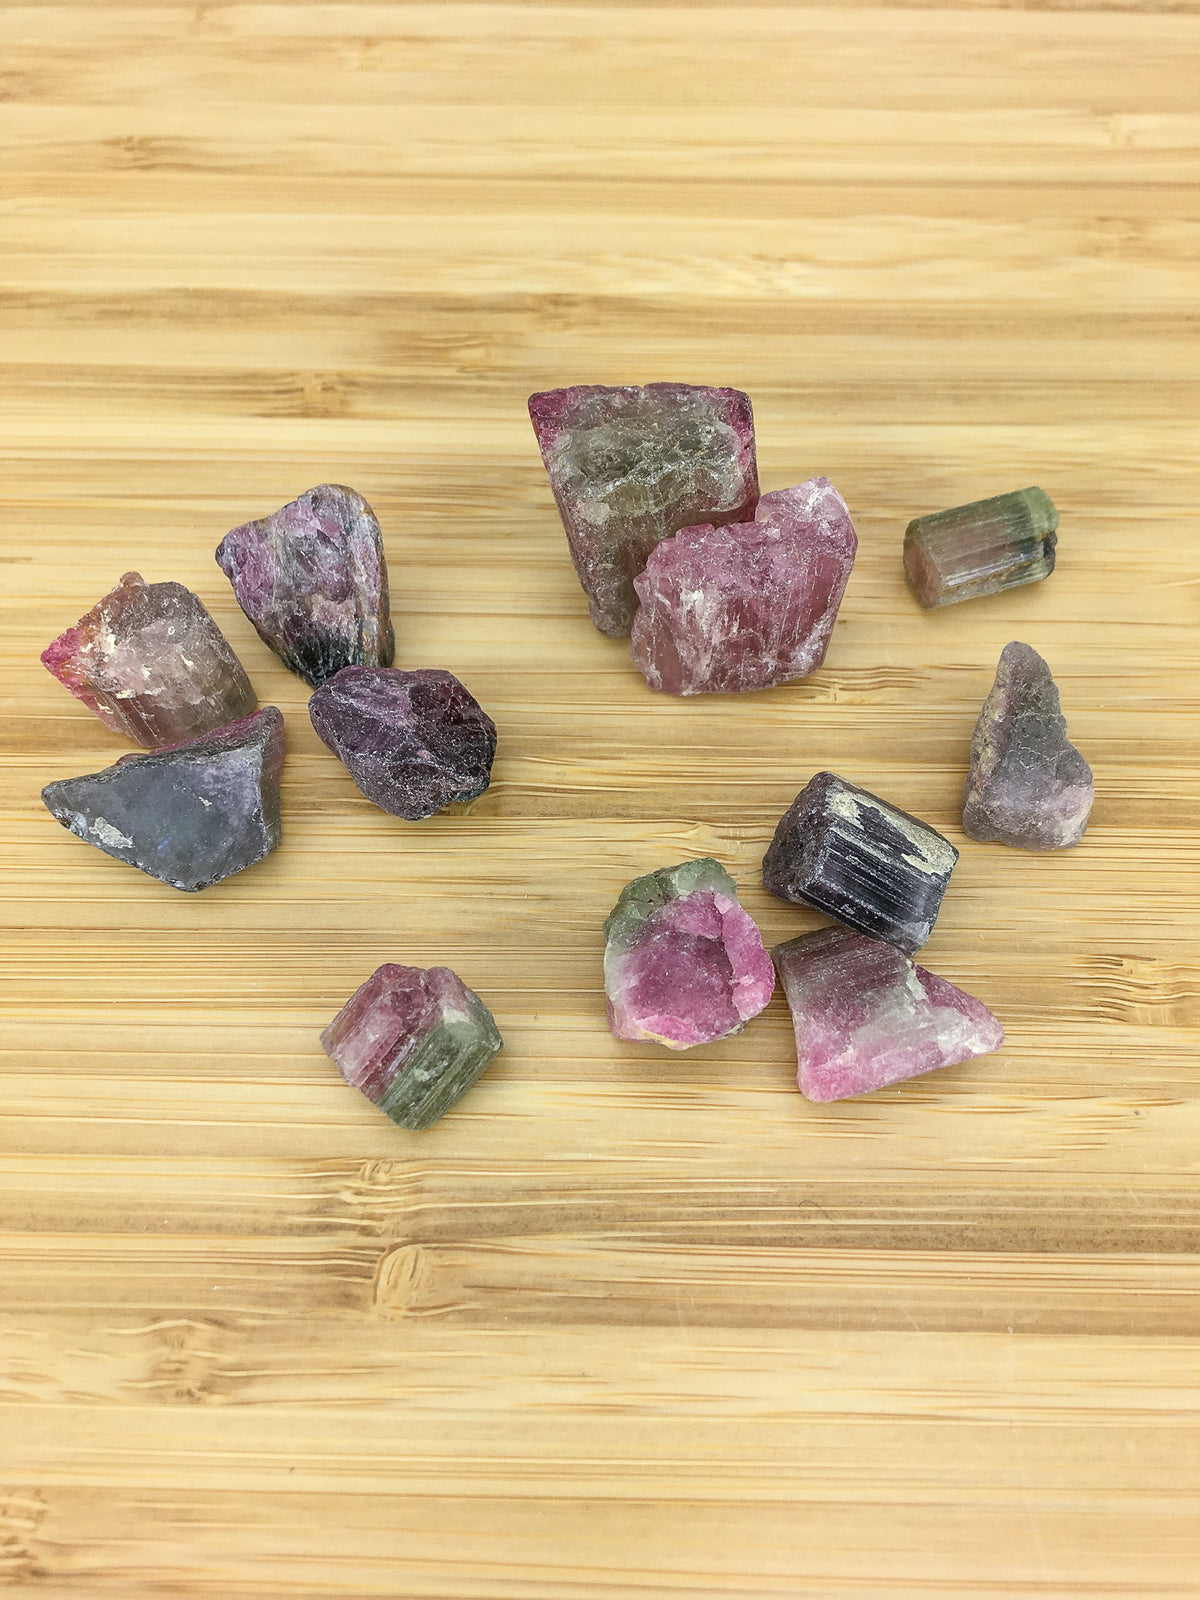 Elbaite - raw tourmaline crystals (greens and pinks)